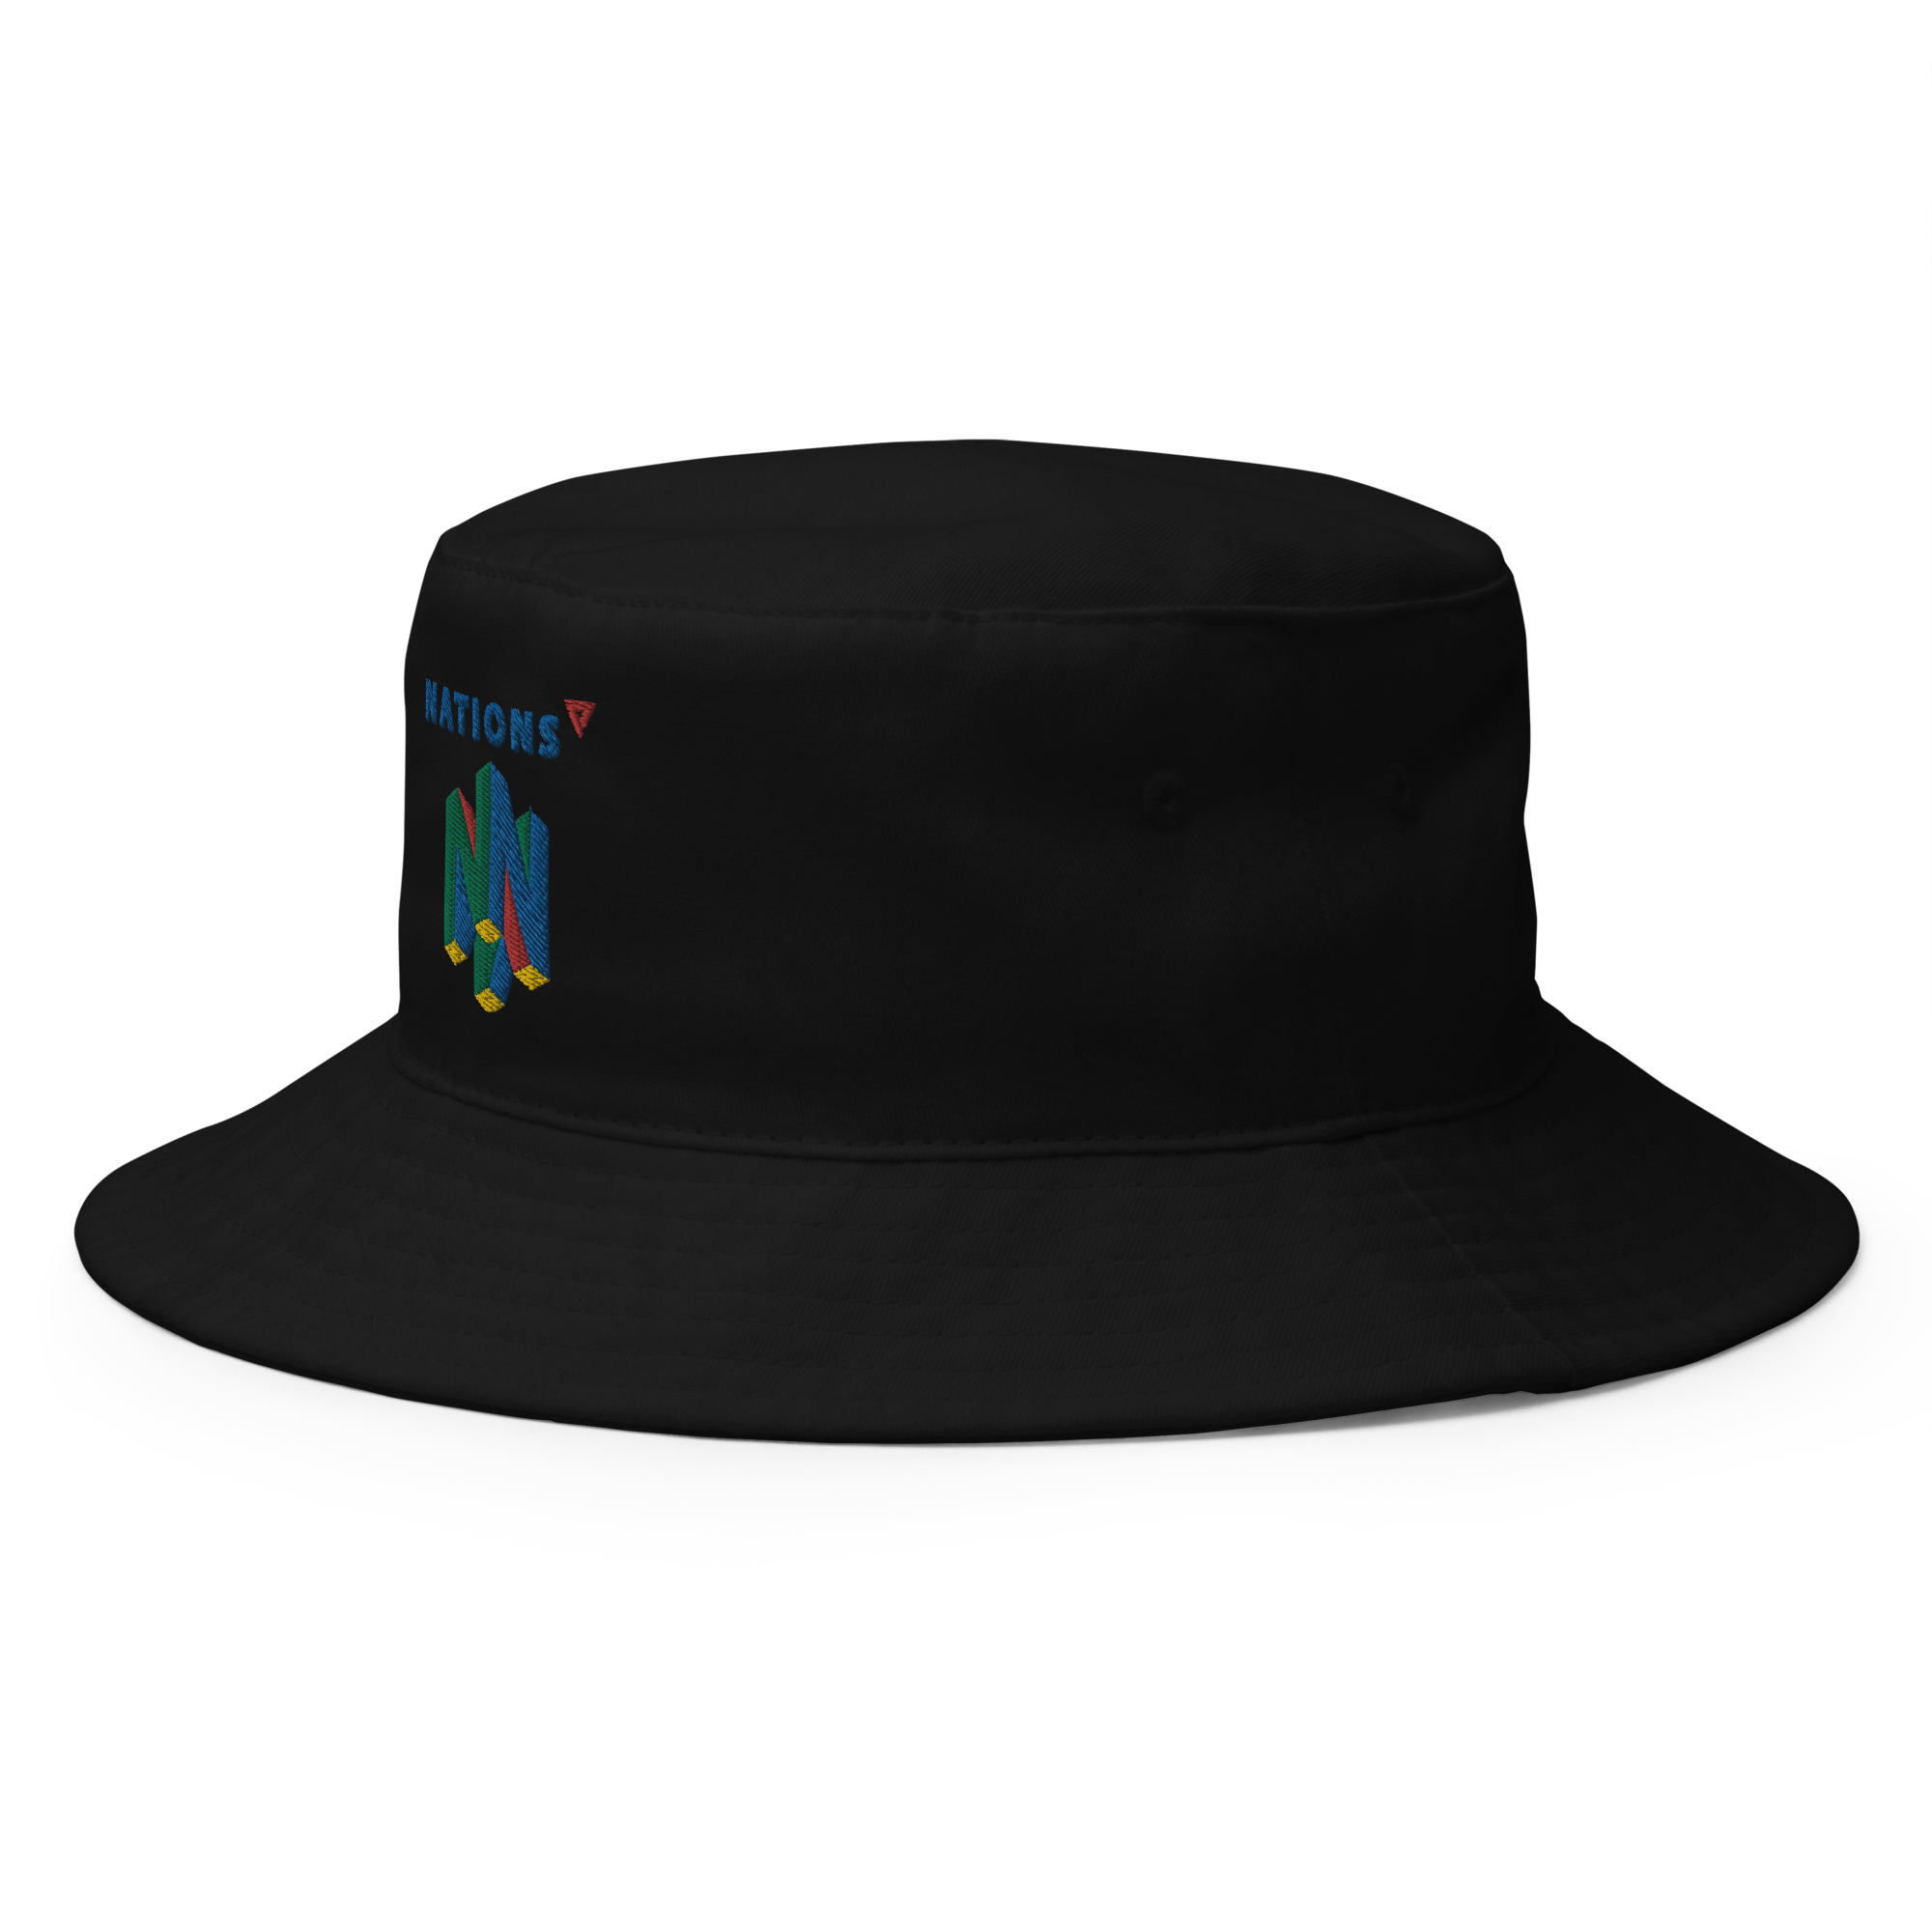 Nations64 Bucket Hat